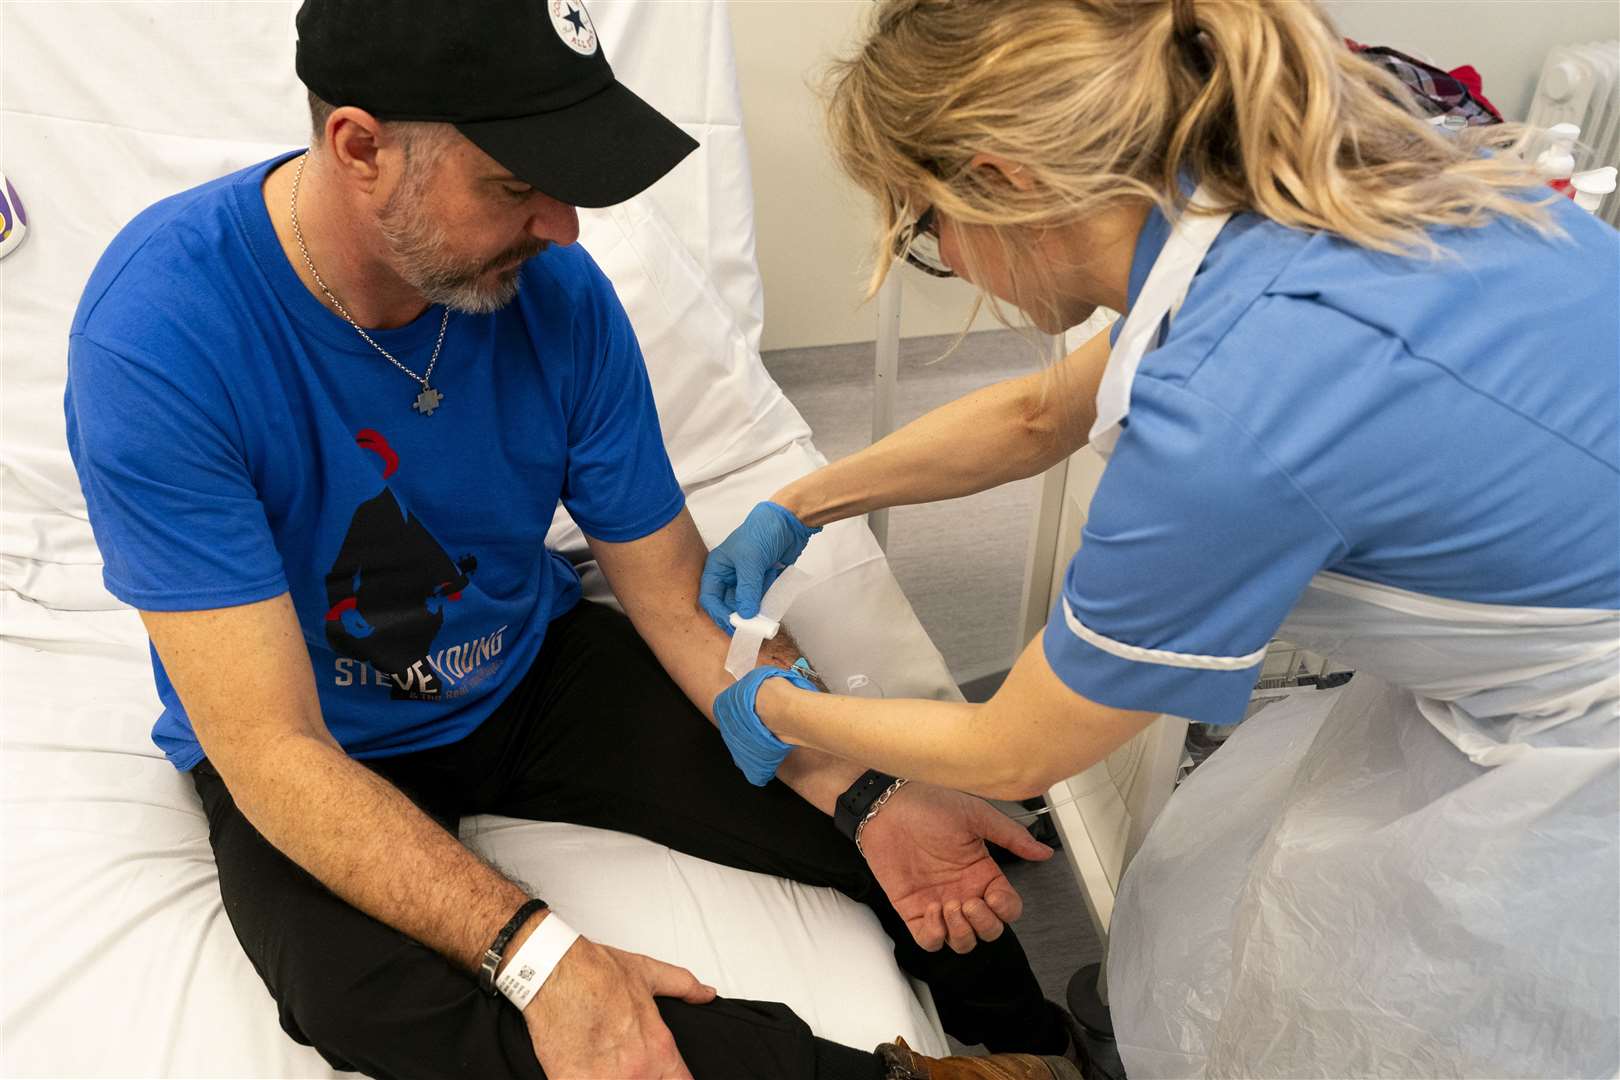 Nurse Eleanor Ferguson gives an infusion to patient Steve Young at University College London Hospital (Jordan Pettitt/PA)